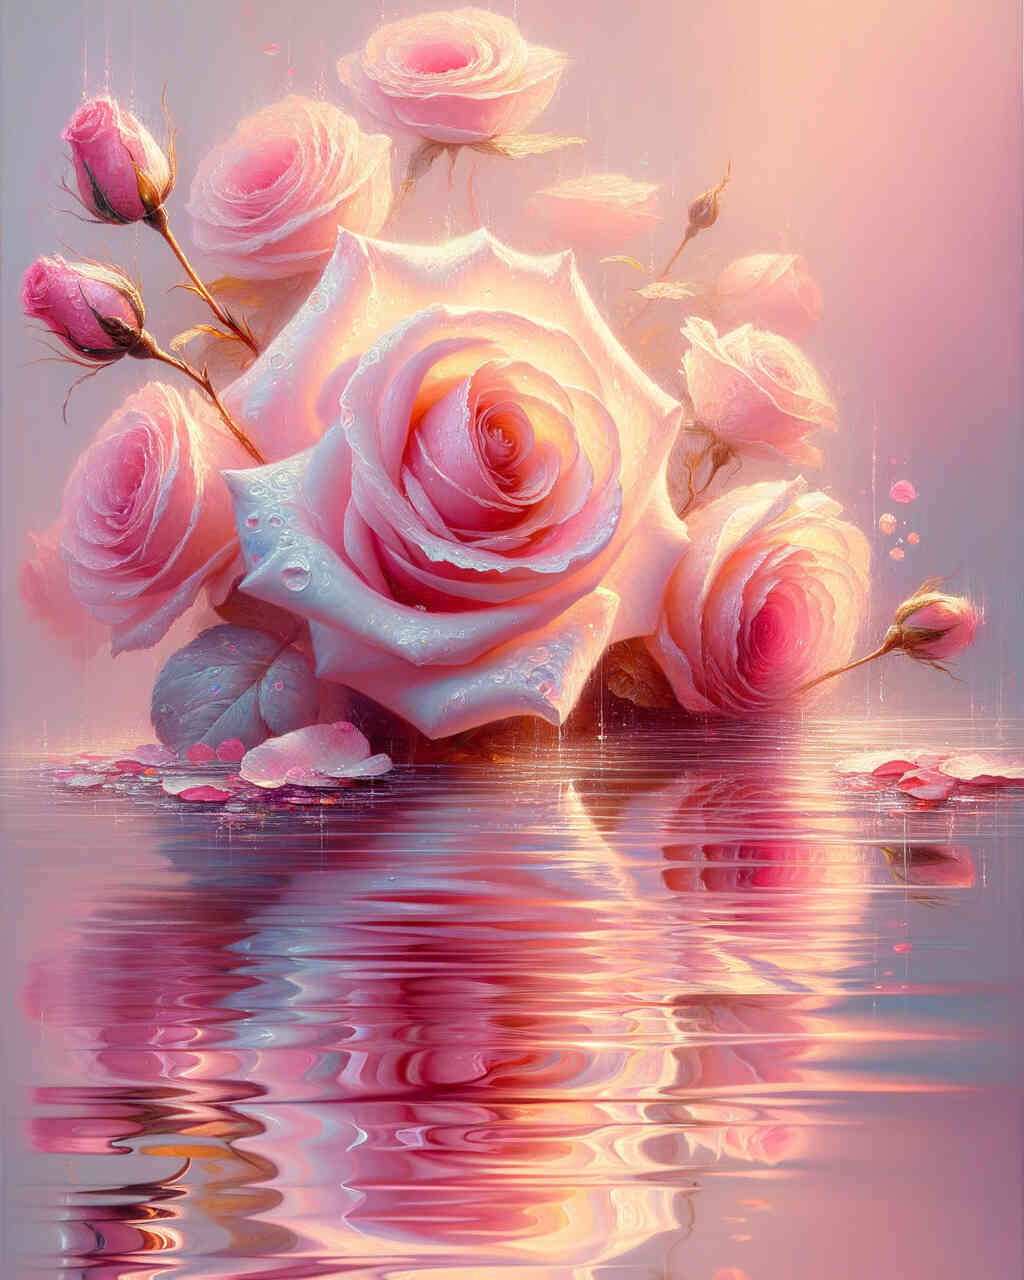 Diamond Painting - Rosa Rosen am Wasser